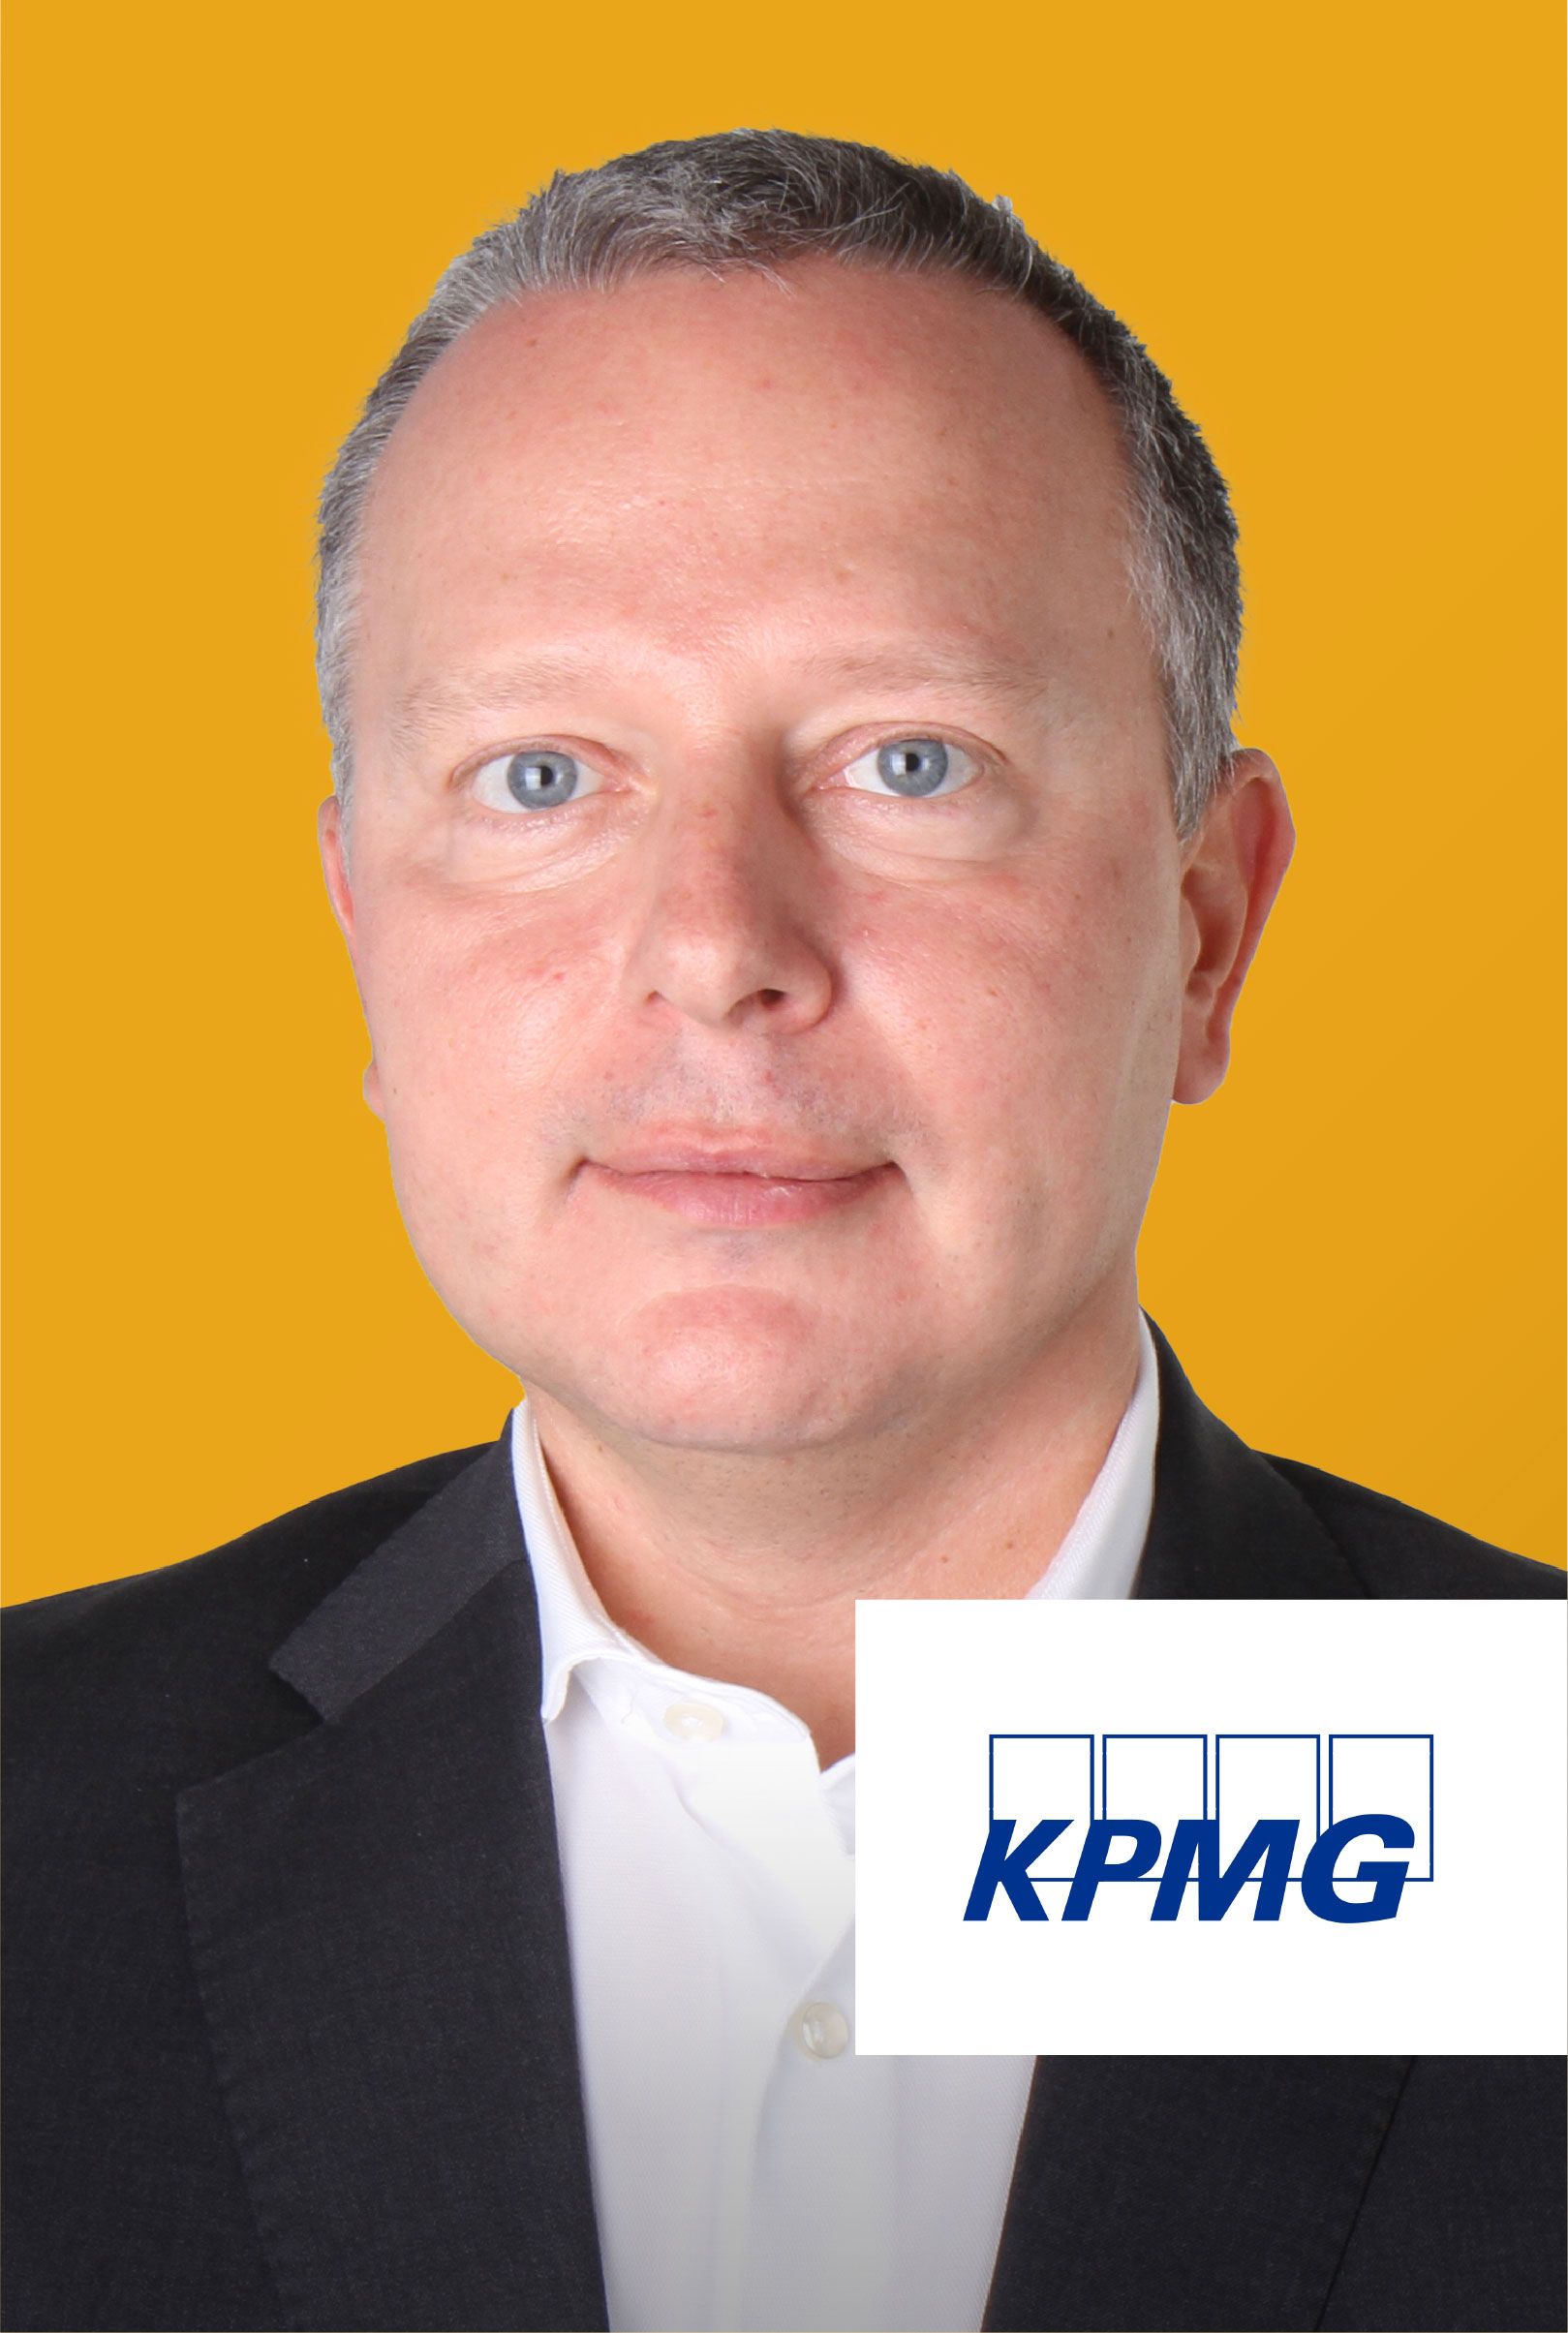 Bruno Martins | KPMG